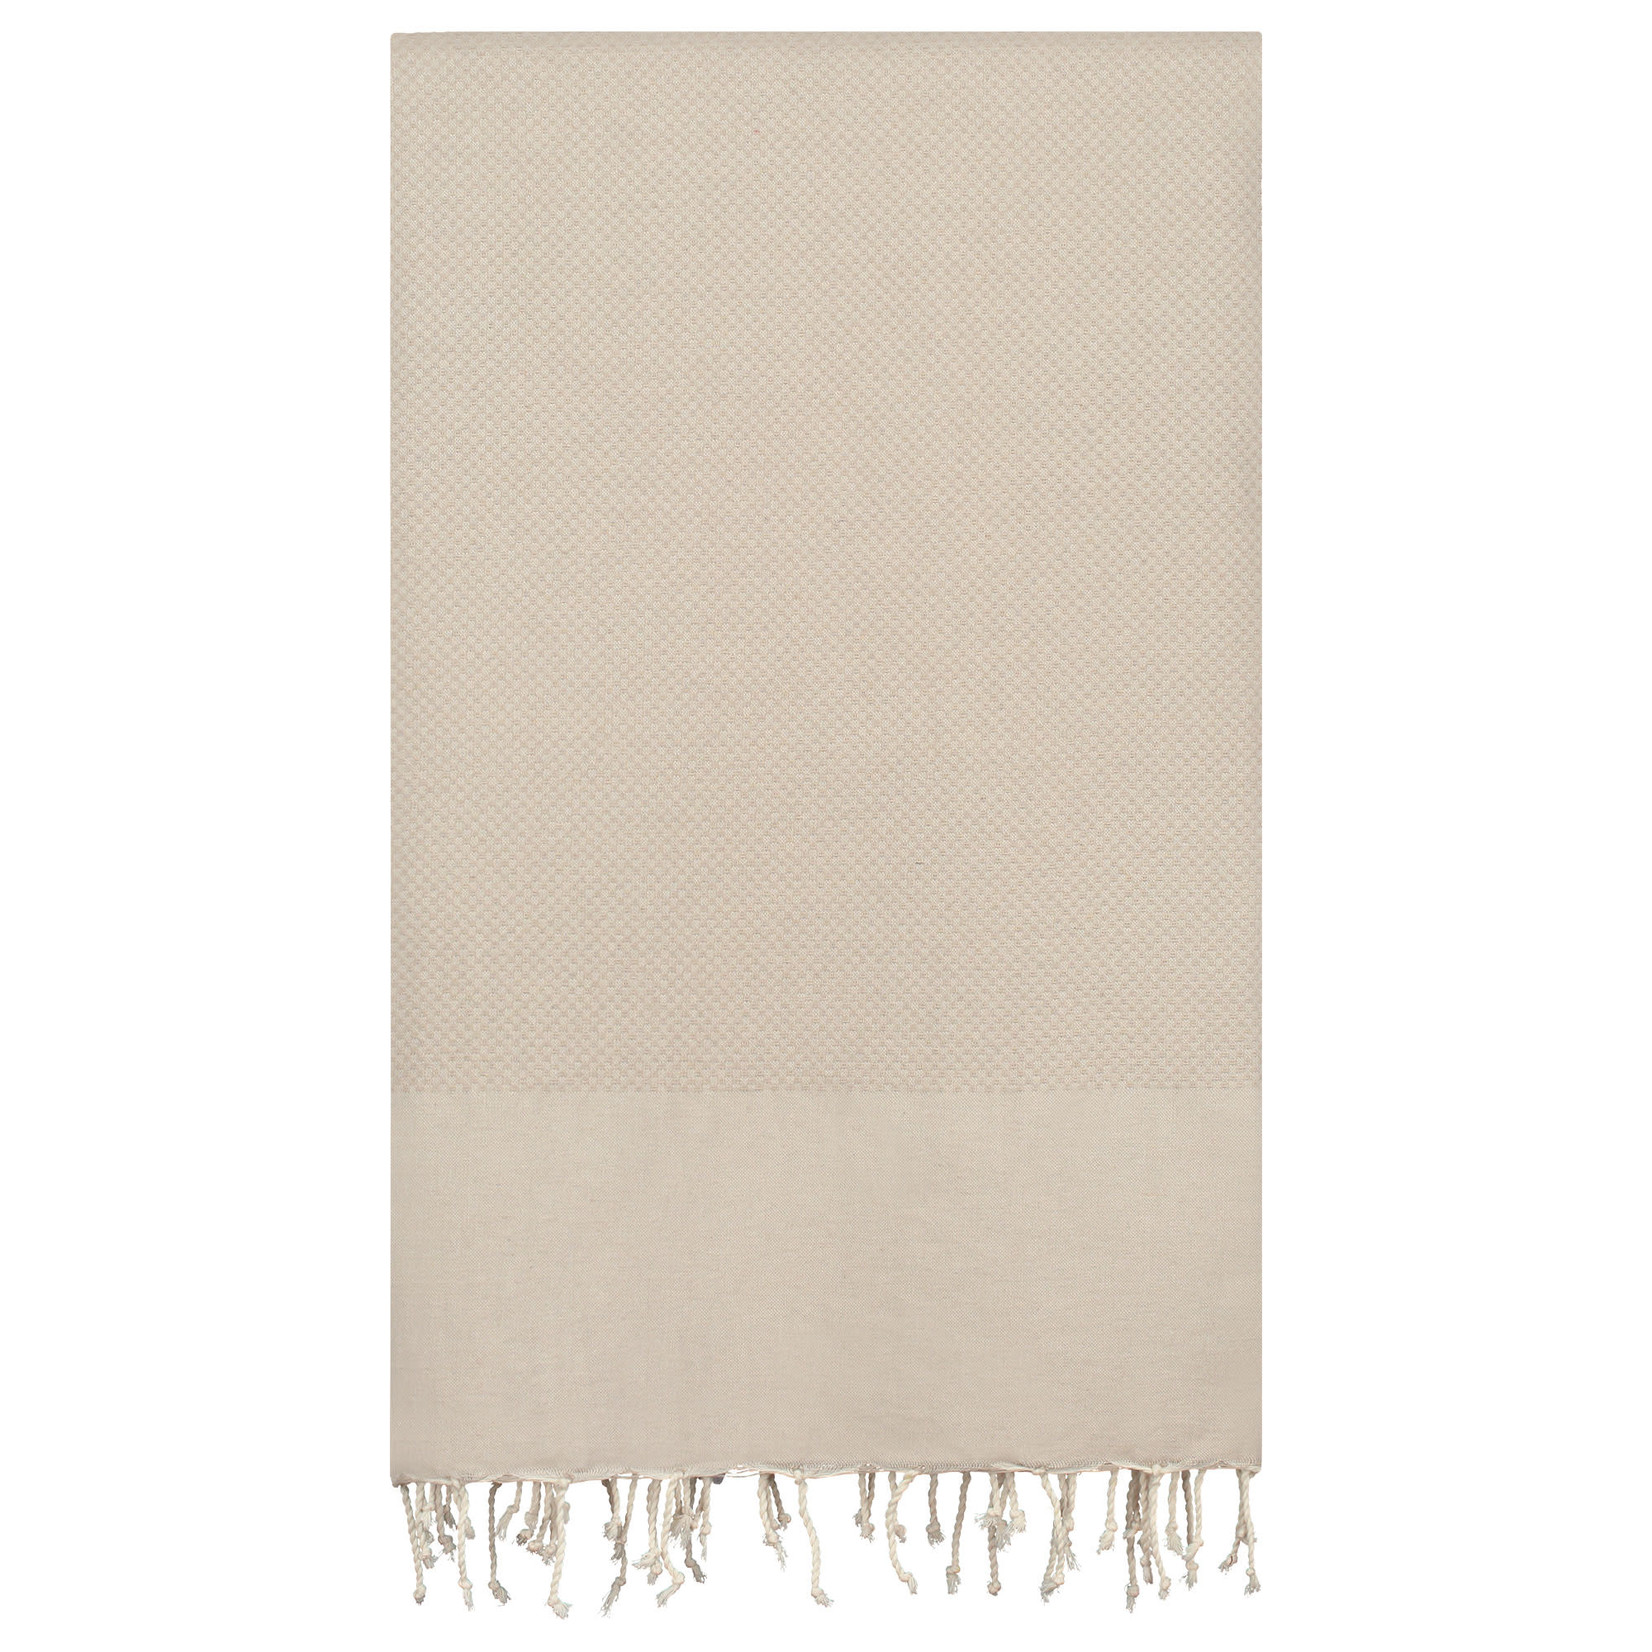 Grand foulard cotton - plaid - 190x300cm